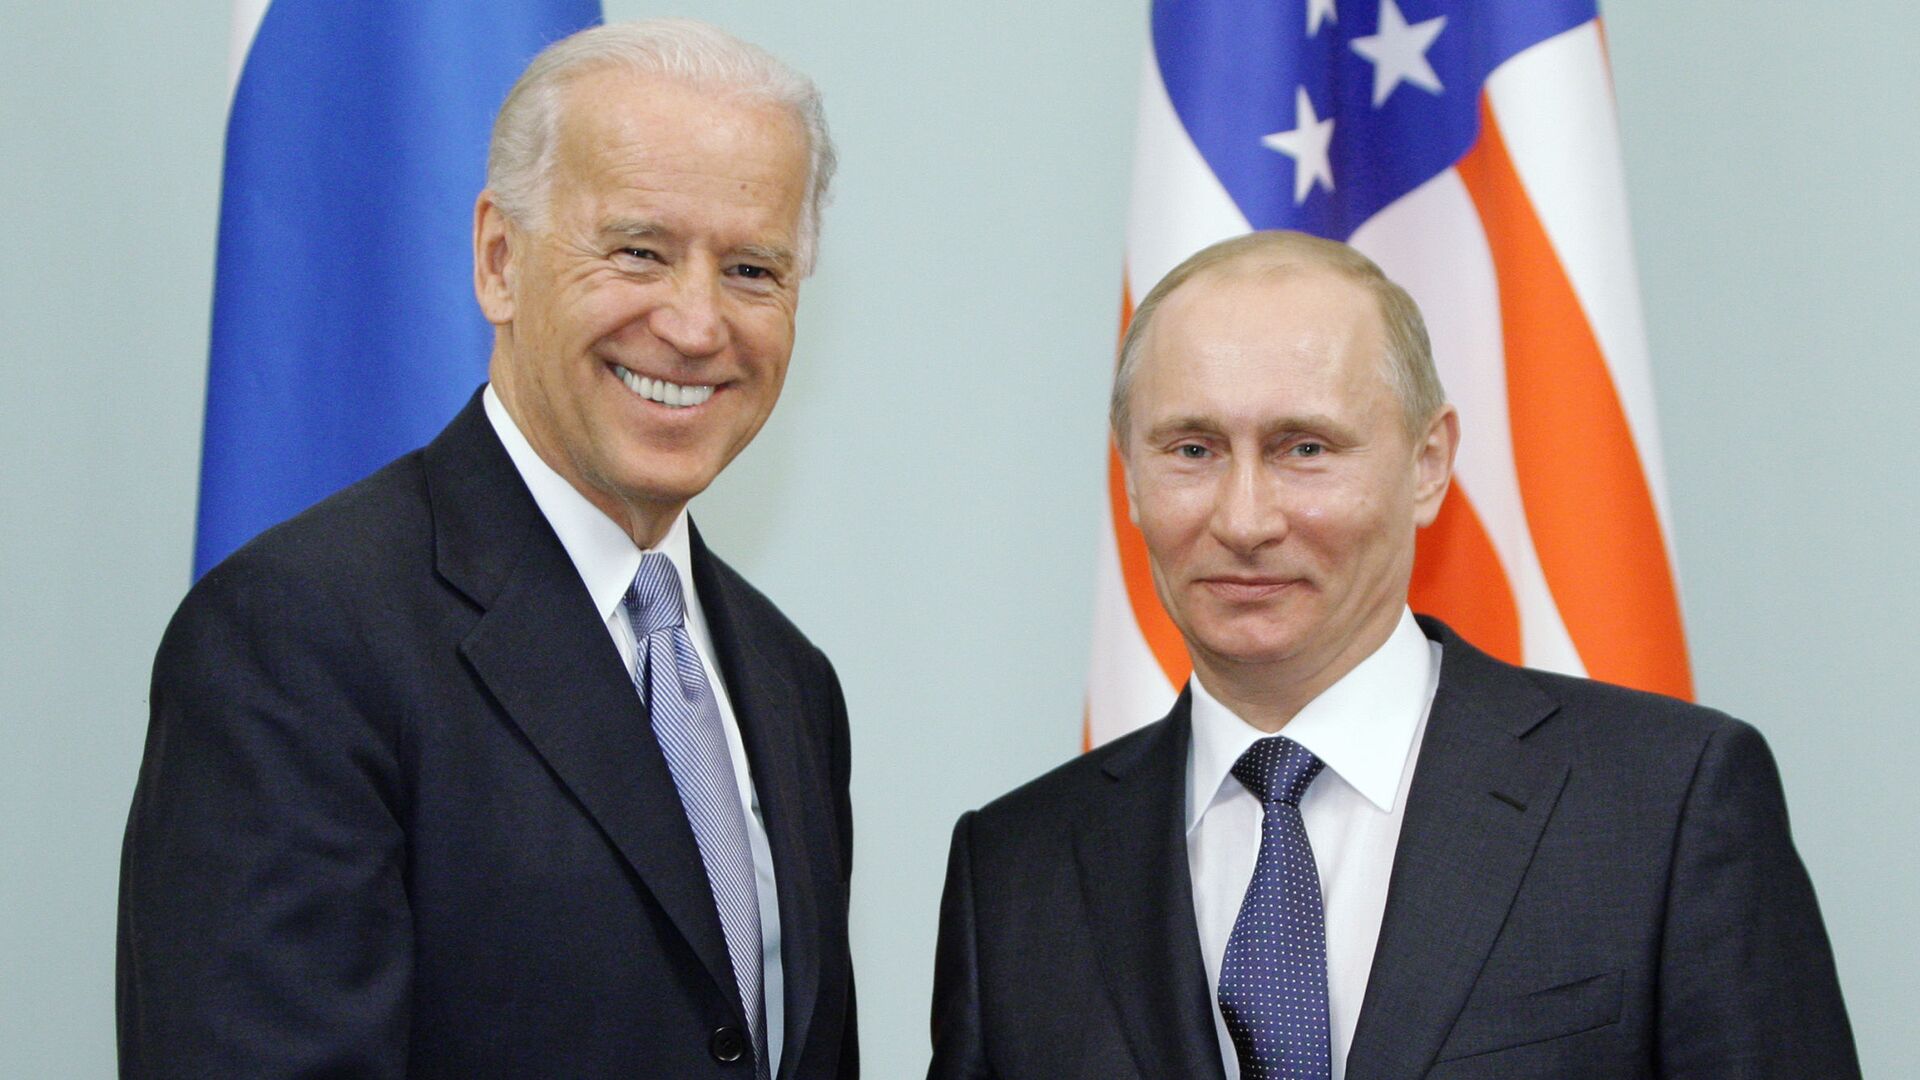 Joe Biden y Vladímir Putin en Rusia (archivo, año 2011) - Sputnik Mundo, 1920, 17.04.2021